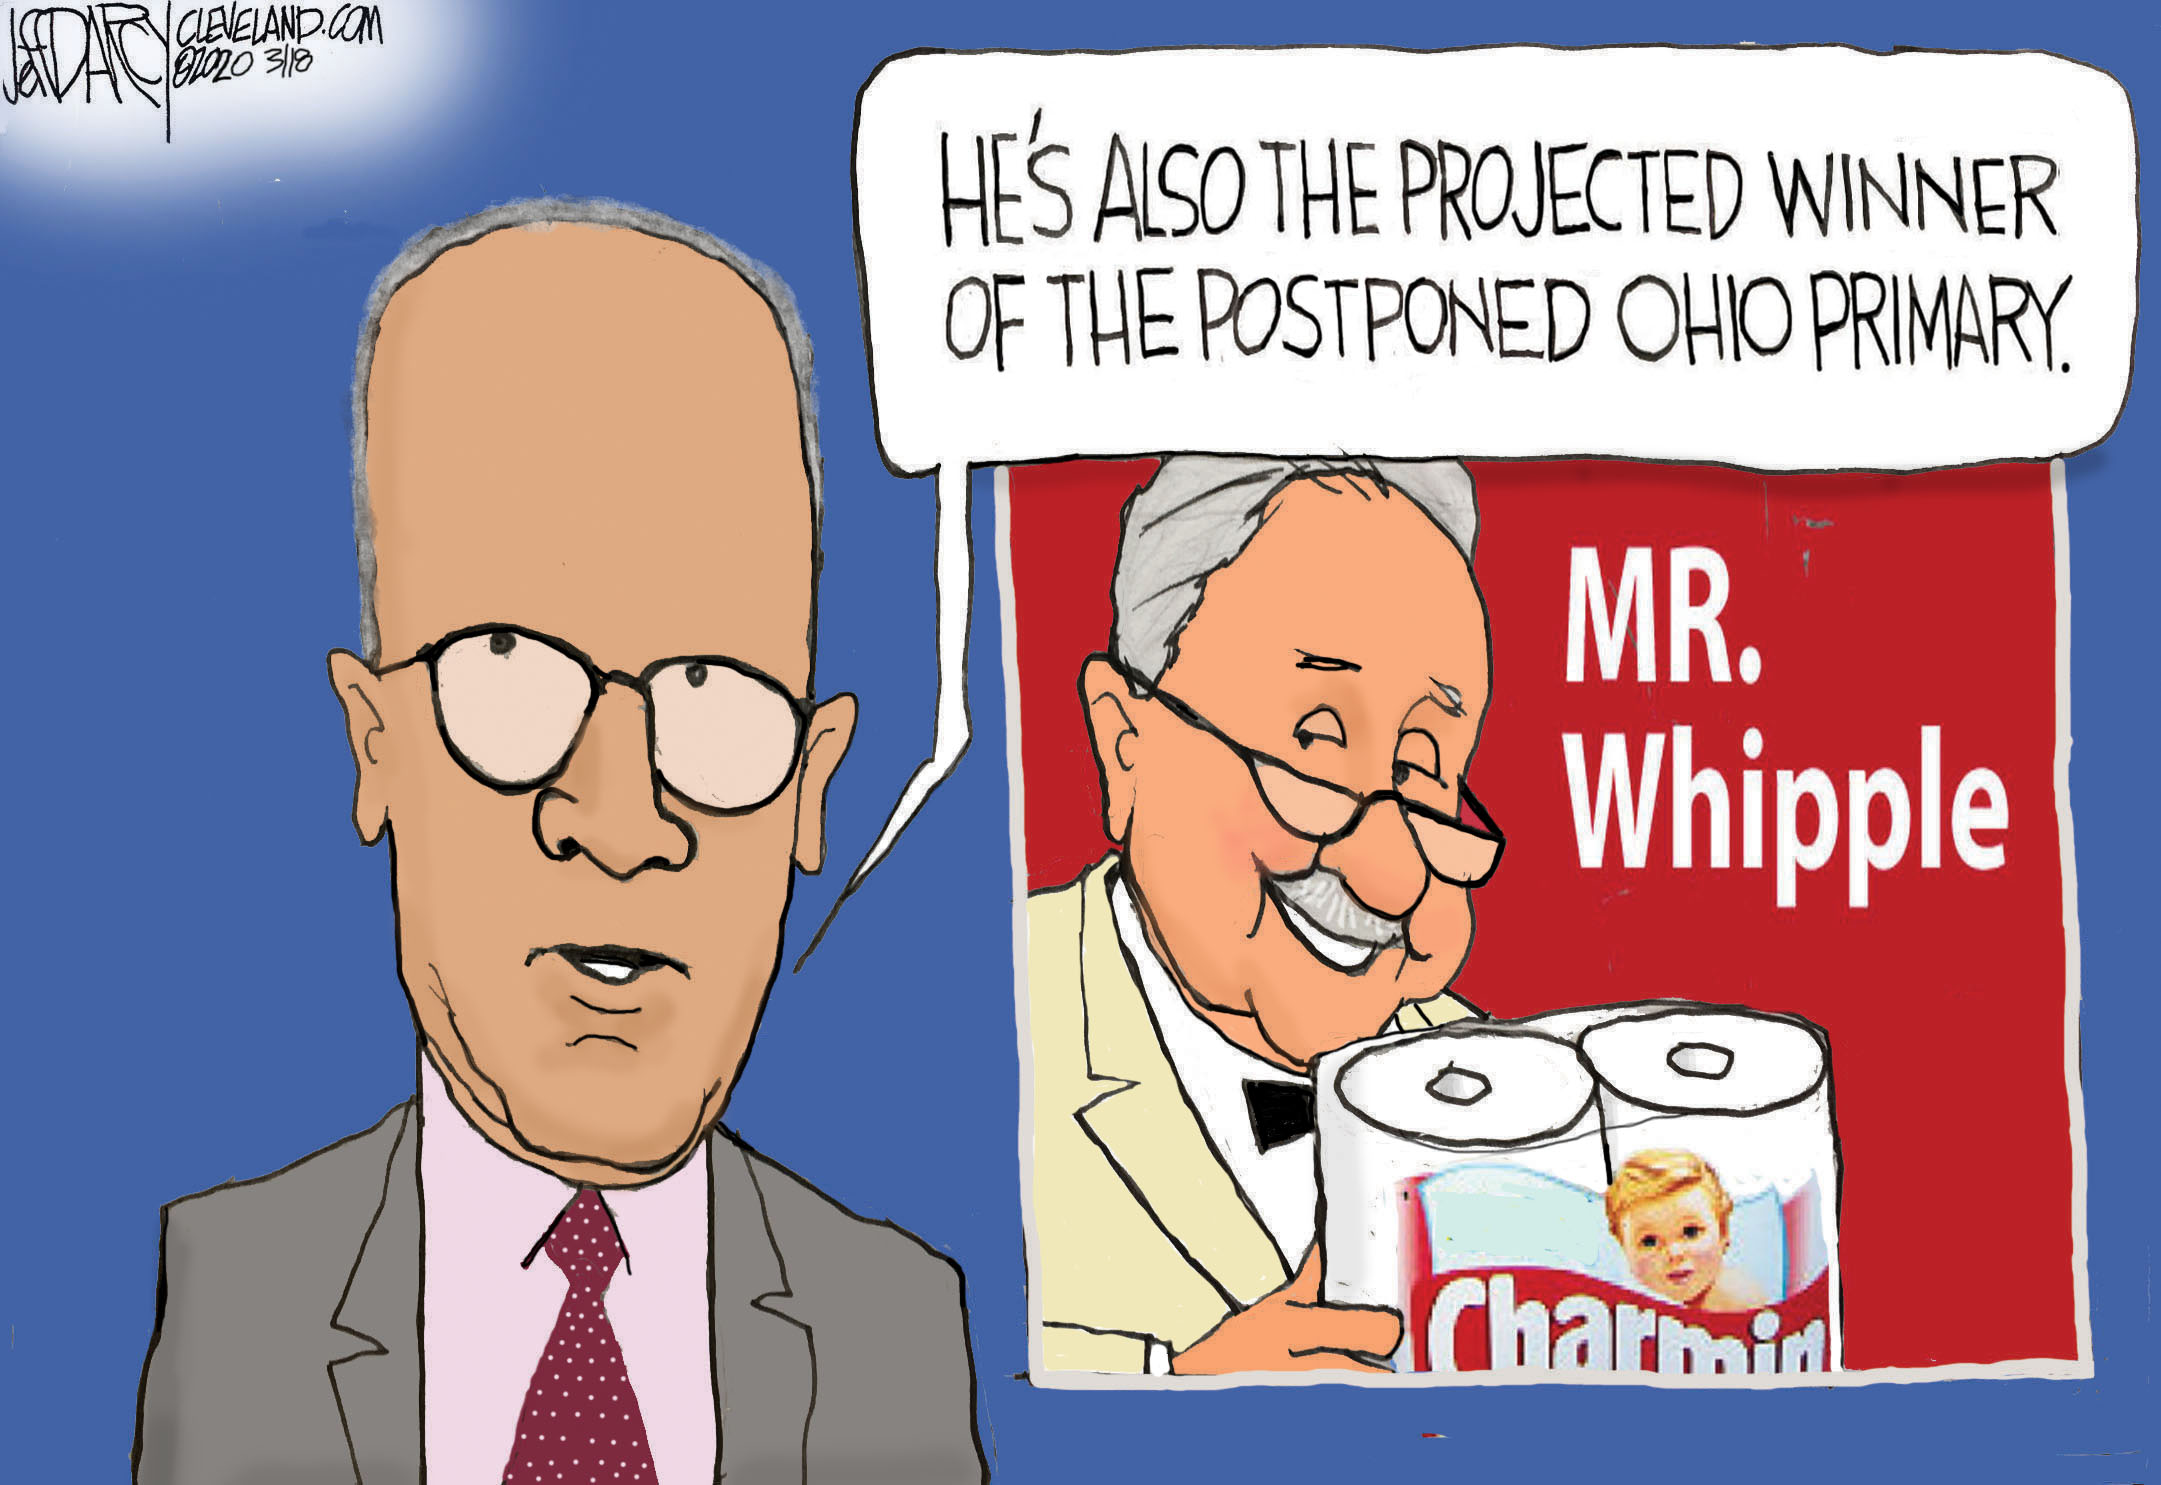 Sanders, Ohio Primary, toilet paper get swept: Darcy cartoon 